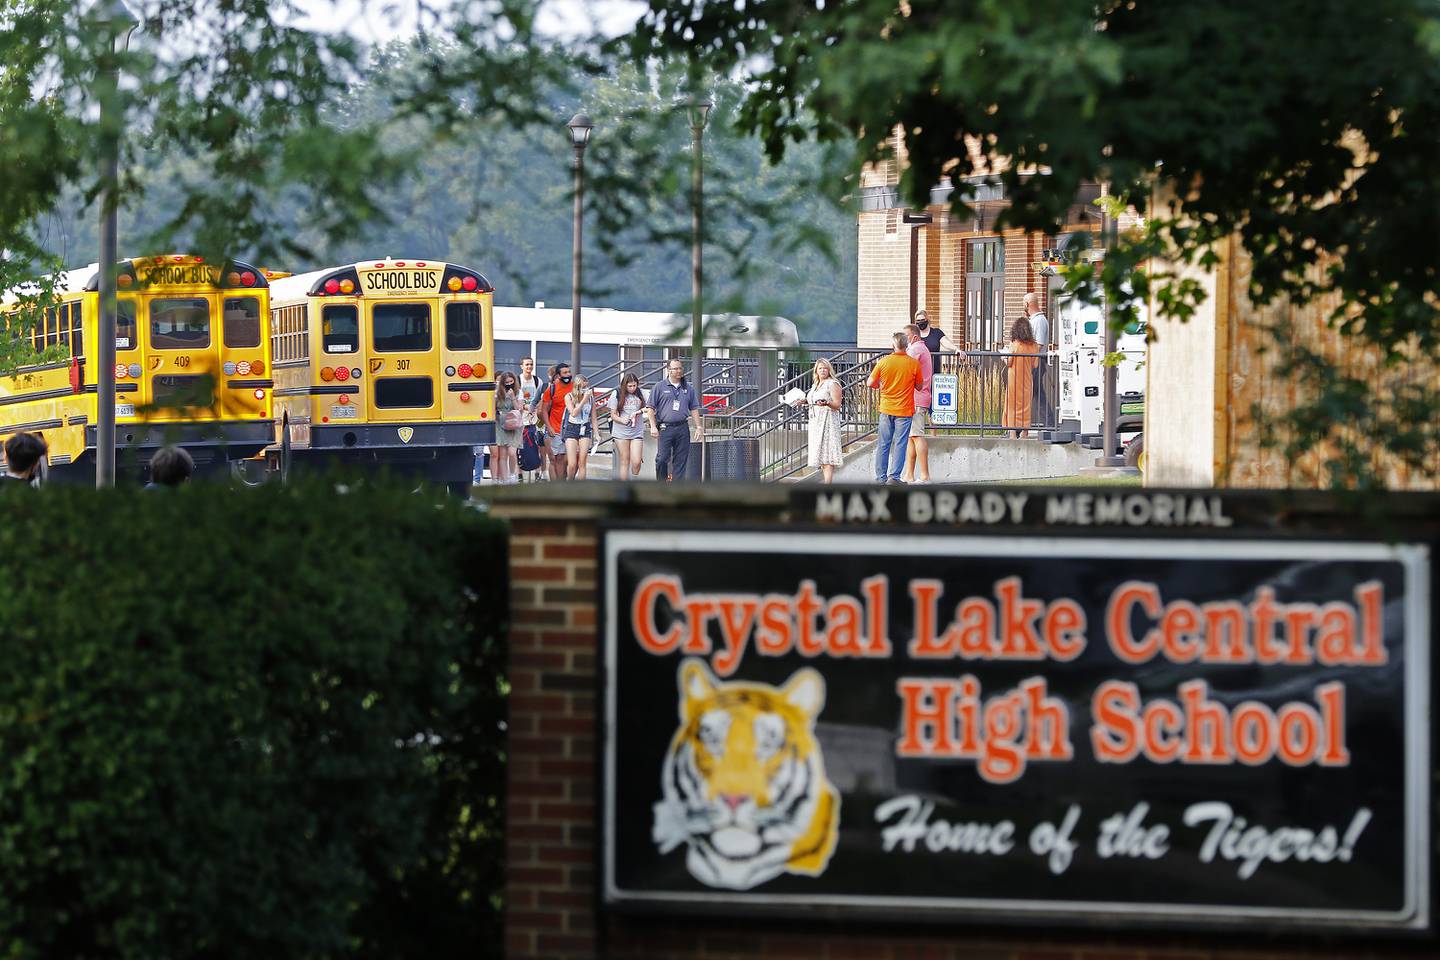 Crystal Lake Central High School